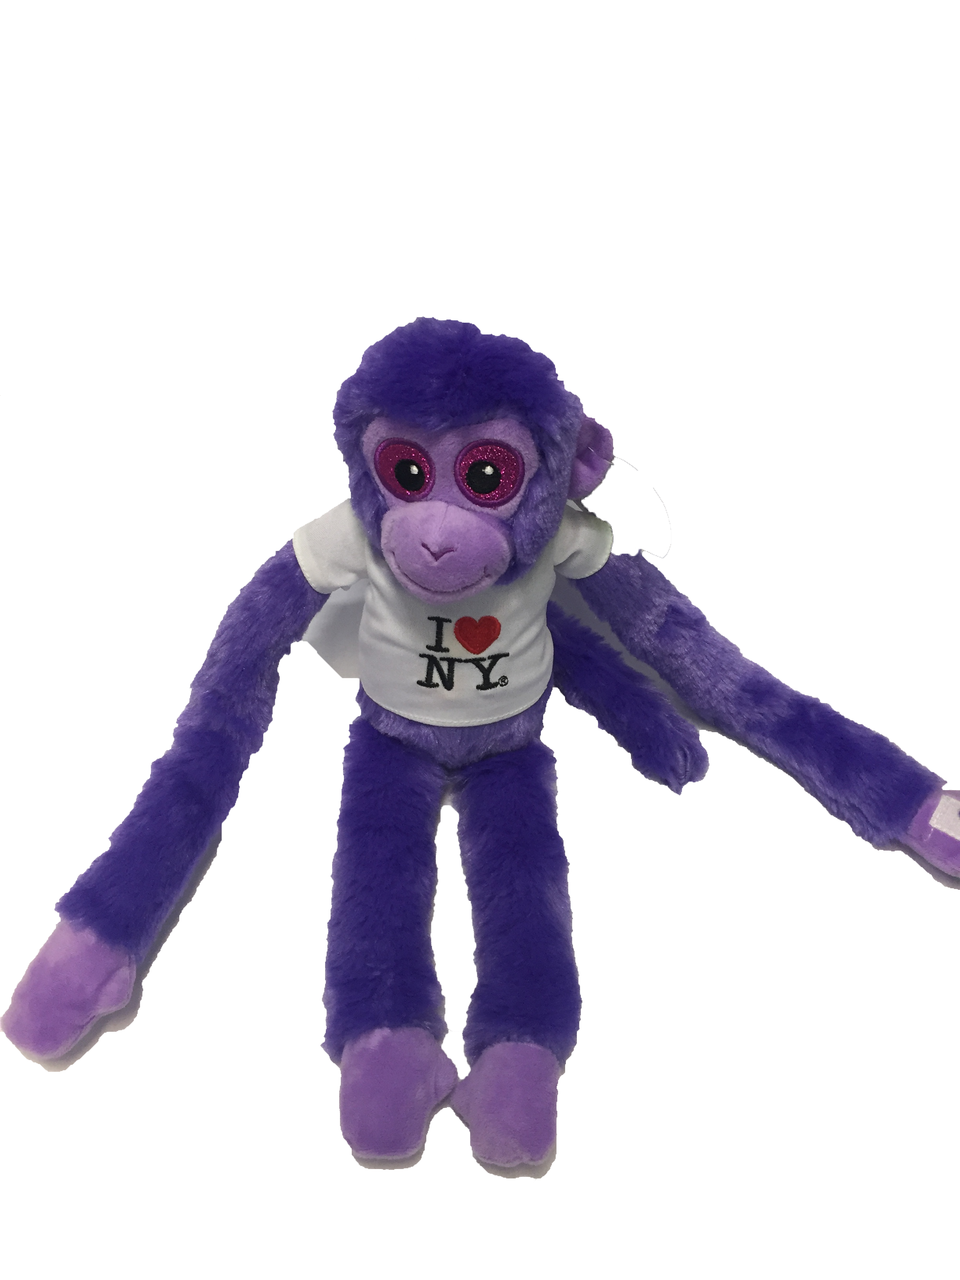 purple monkey stuffed animal